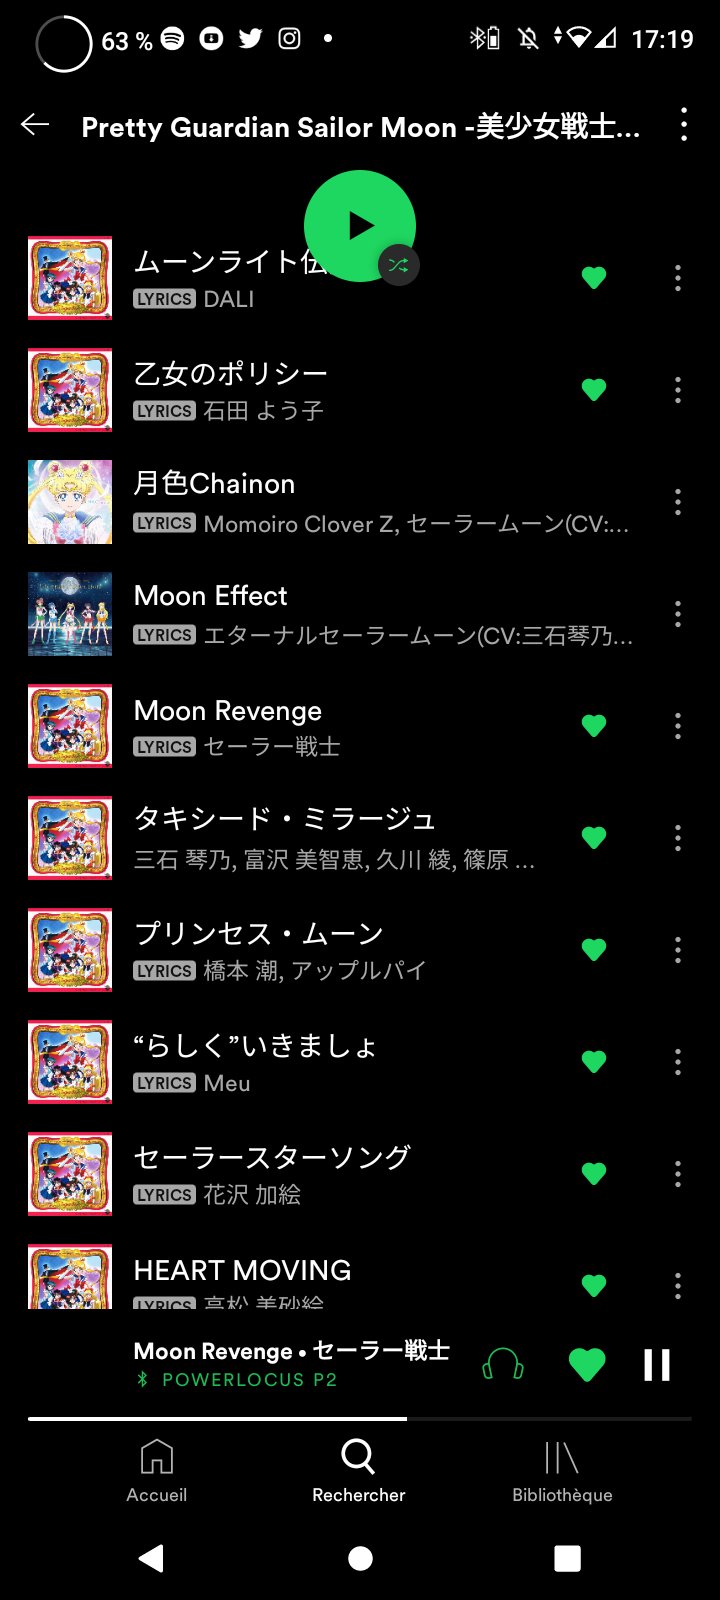 Sailor Moon An Official Sailor Moon Playlist On Spotify Twitter